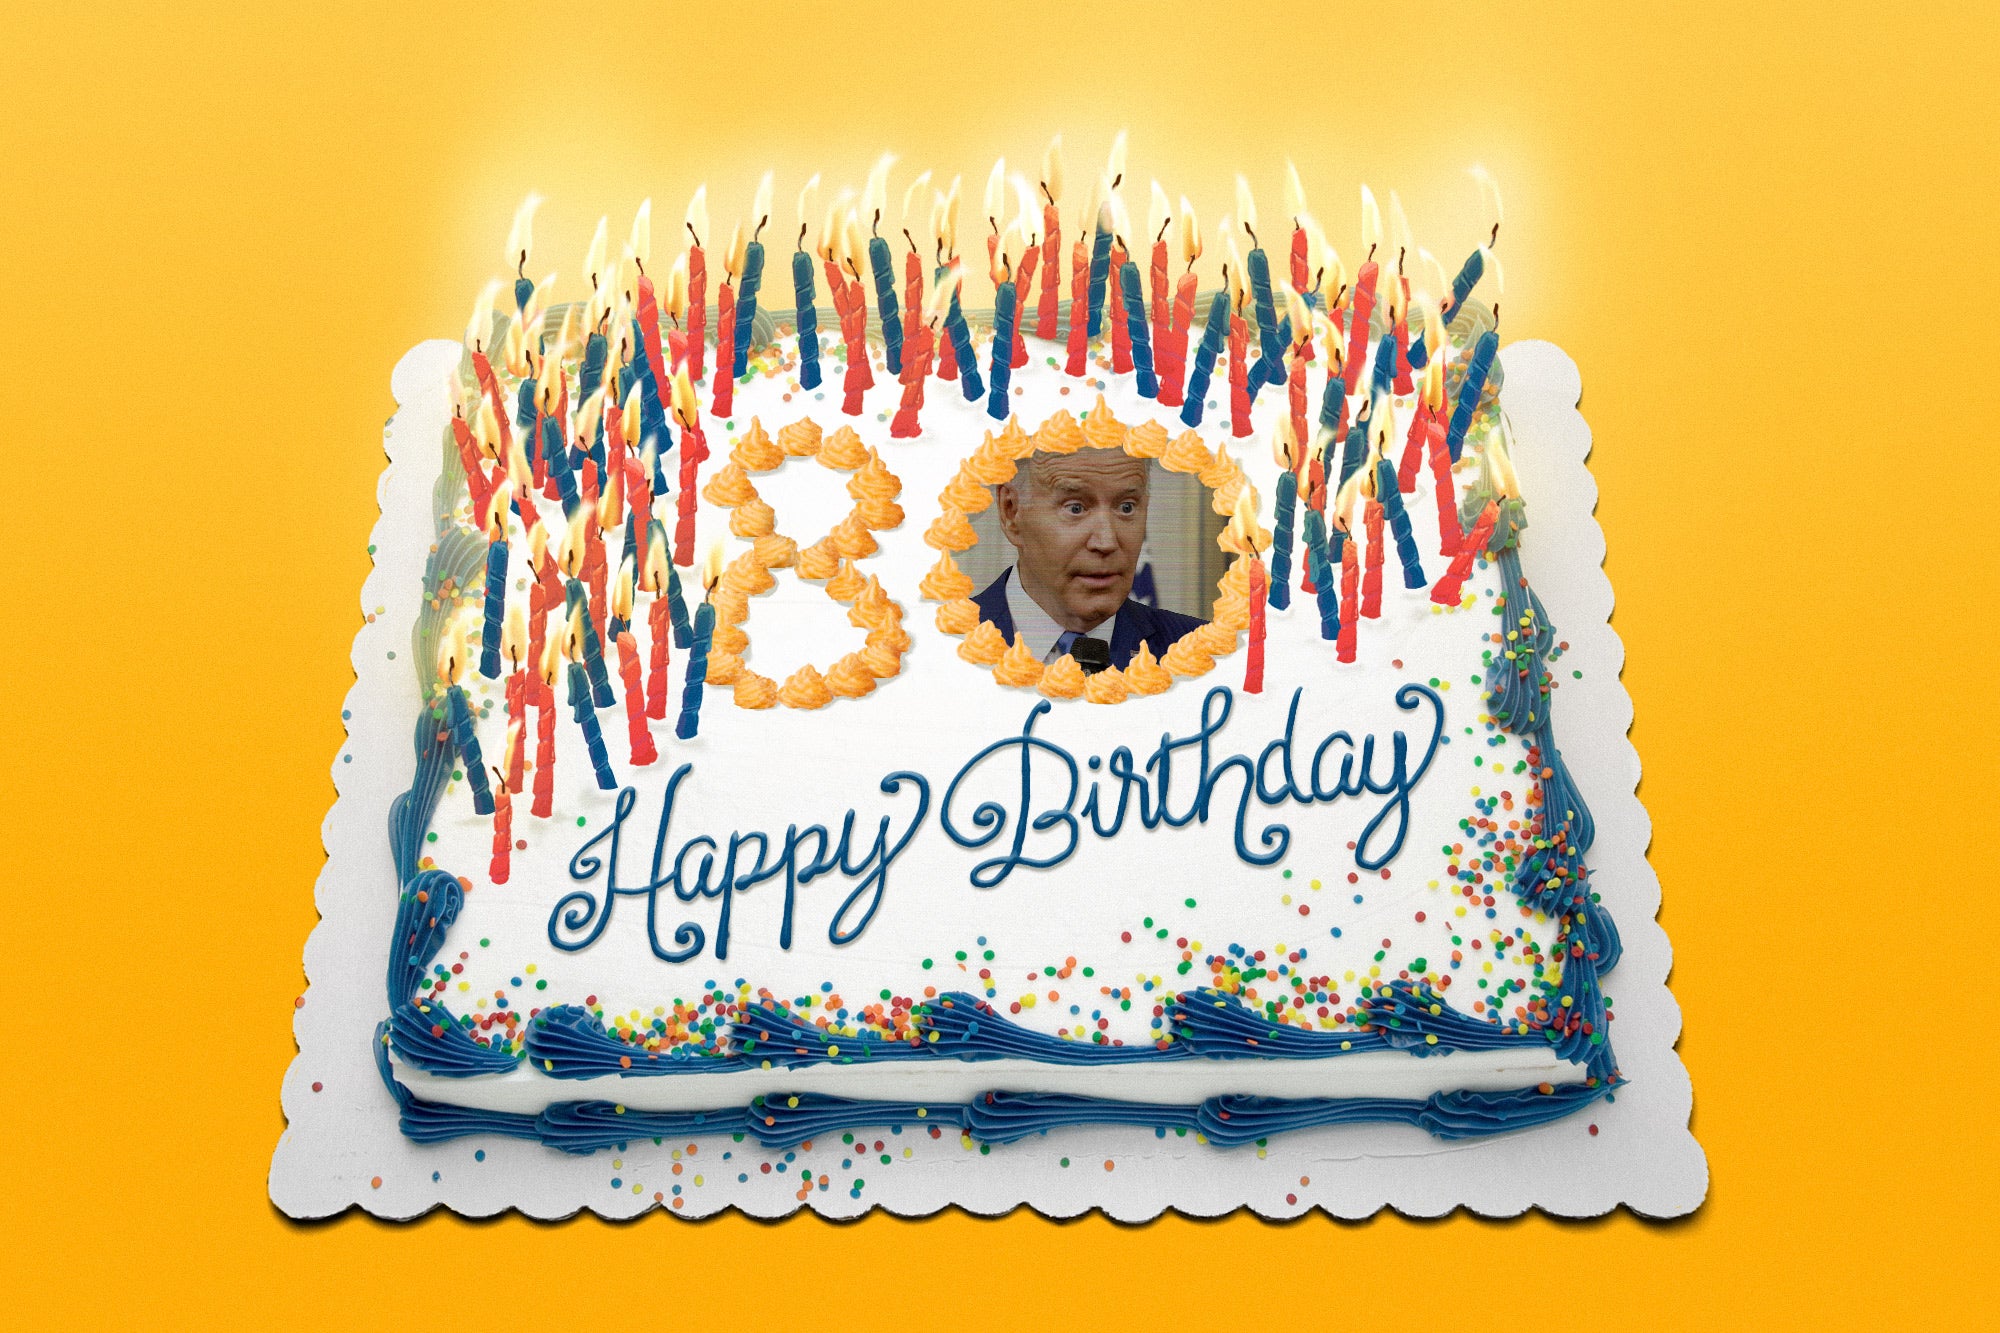 Joe Biden's 80th birthday: Wow, he's really old.